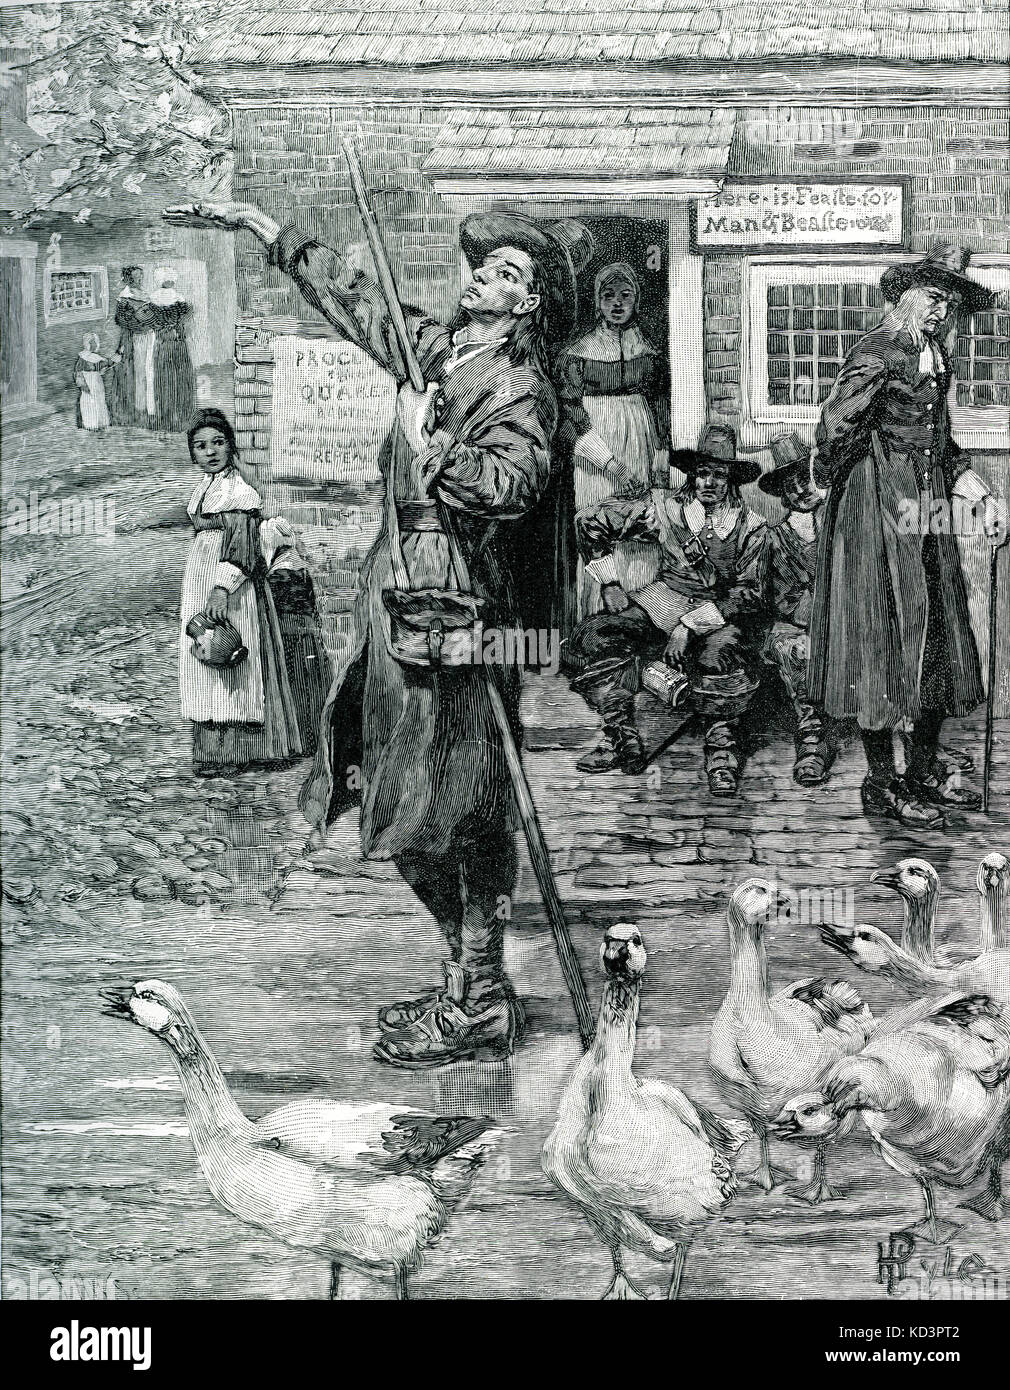 Quaker exhorter in New England, Massachusetts, 1600s. Illustration by Howard Pyle, 1906 Stock Photo